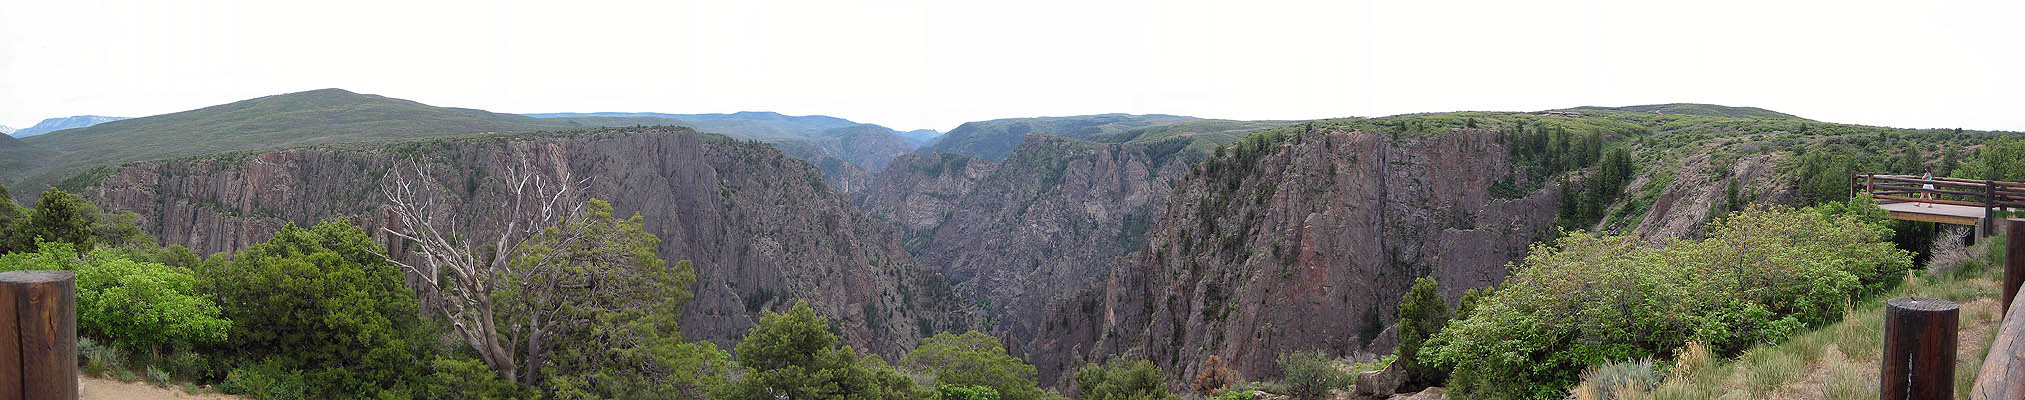 Telluride 2006: Black Canyon Panoramic View